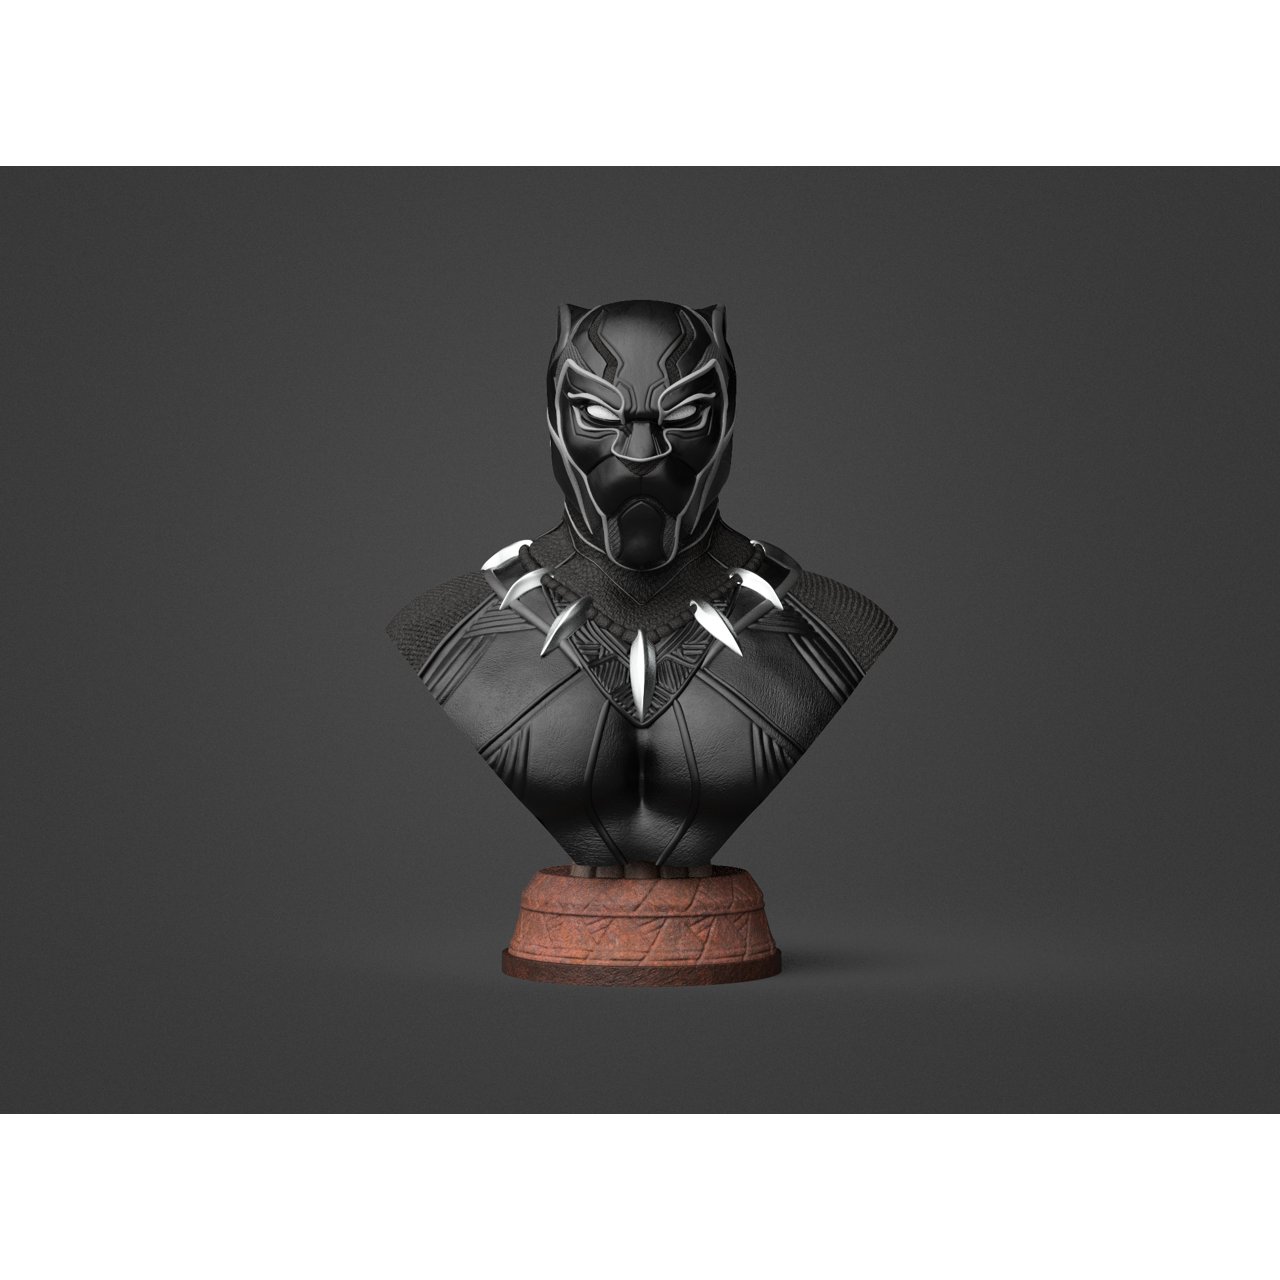 Fan Art Models Black Panther Bust from Marvel comics  MINISTL 6